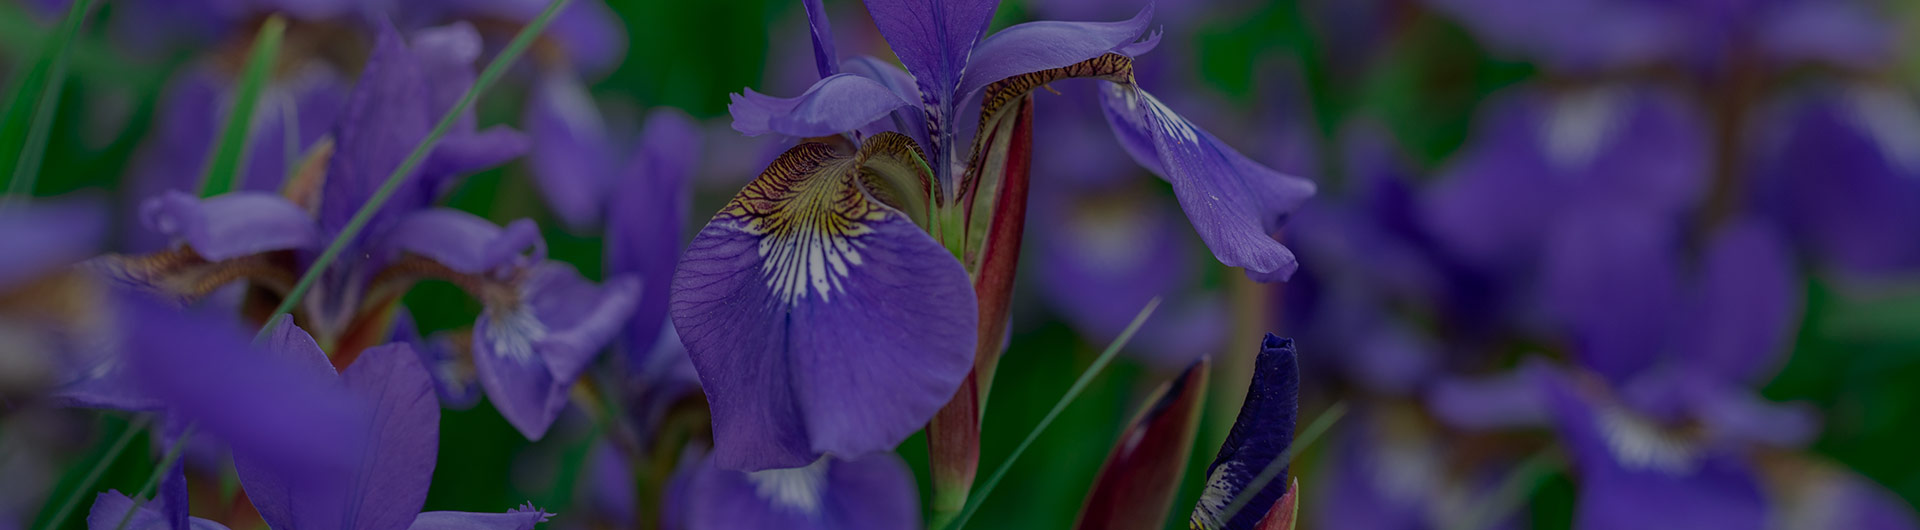 Iris flowers, Tennessee's state flower.